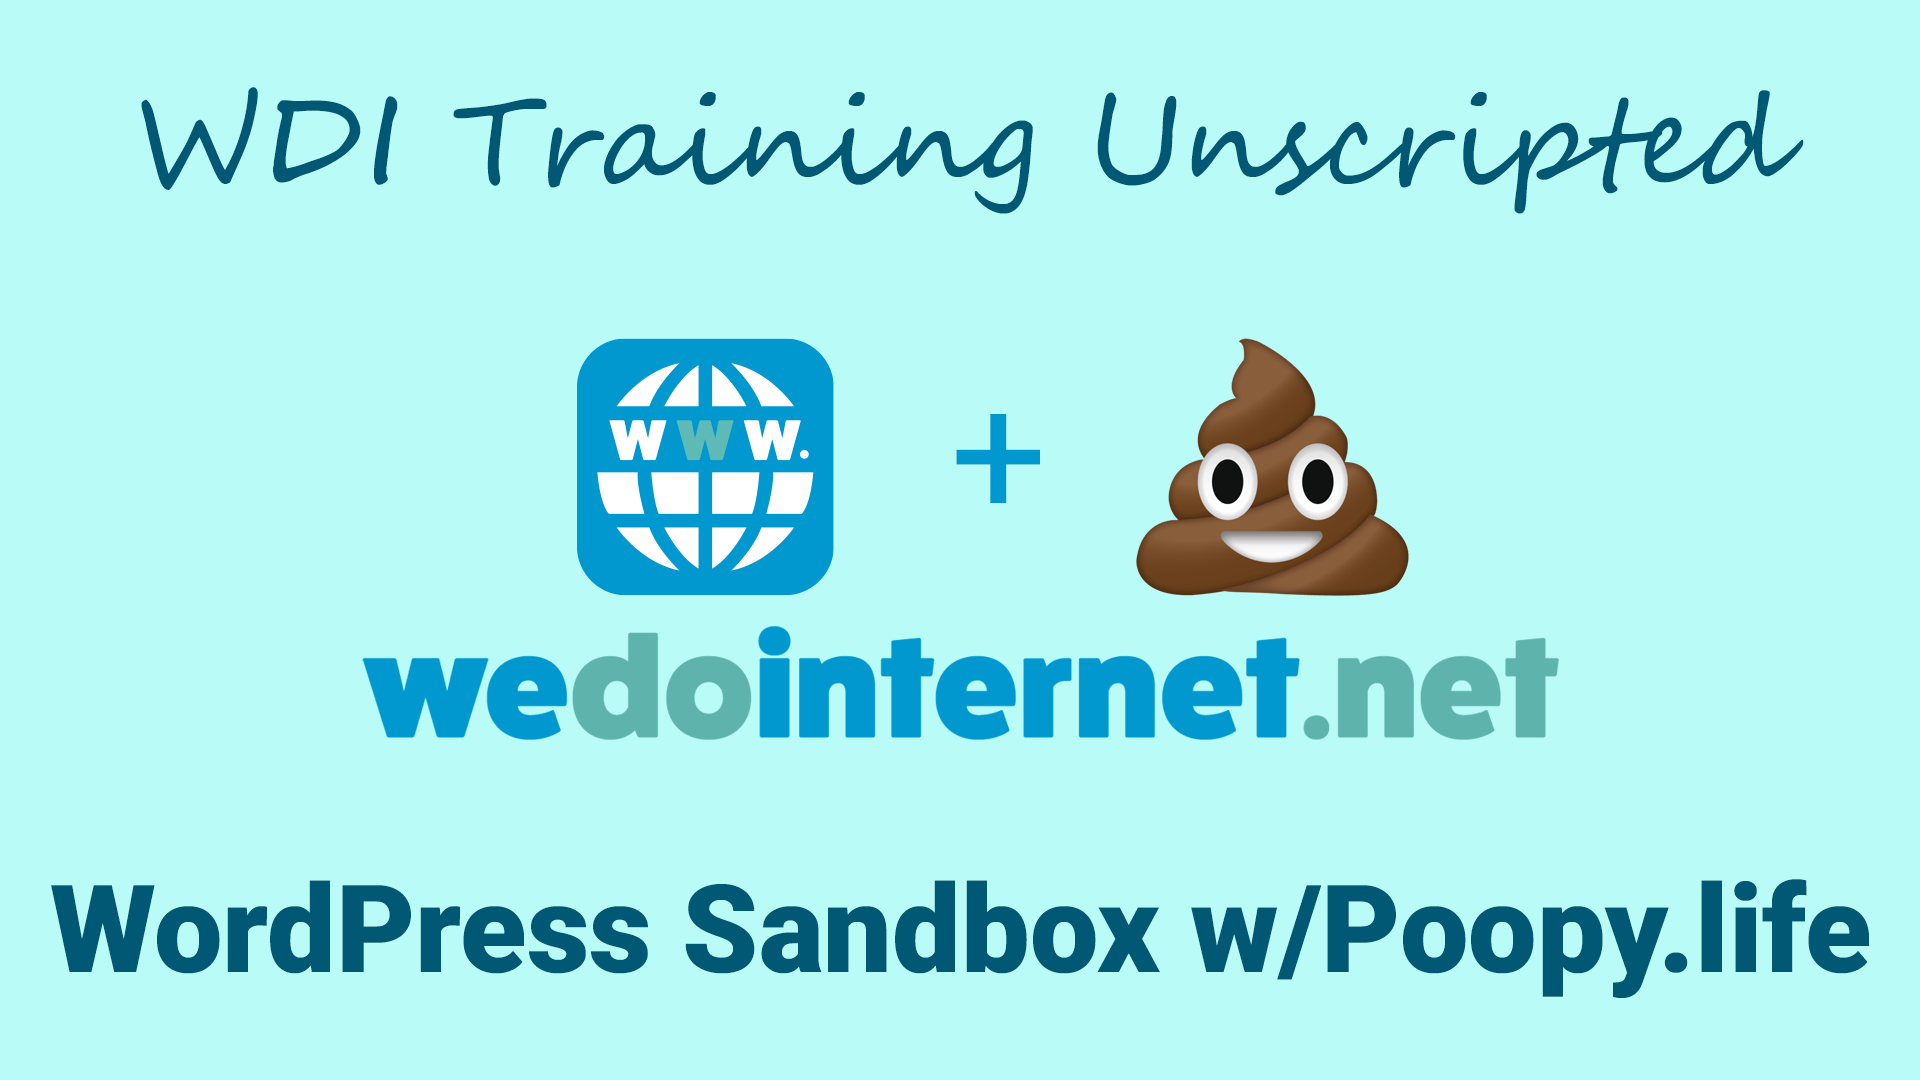 We Do Internet image of poopy,life WordPress Sandbox Poopy.life training.